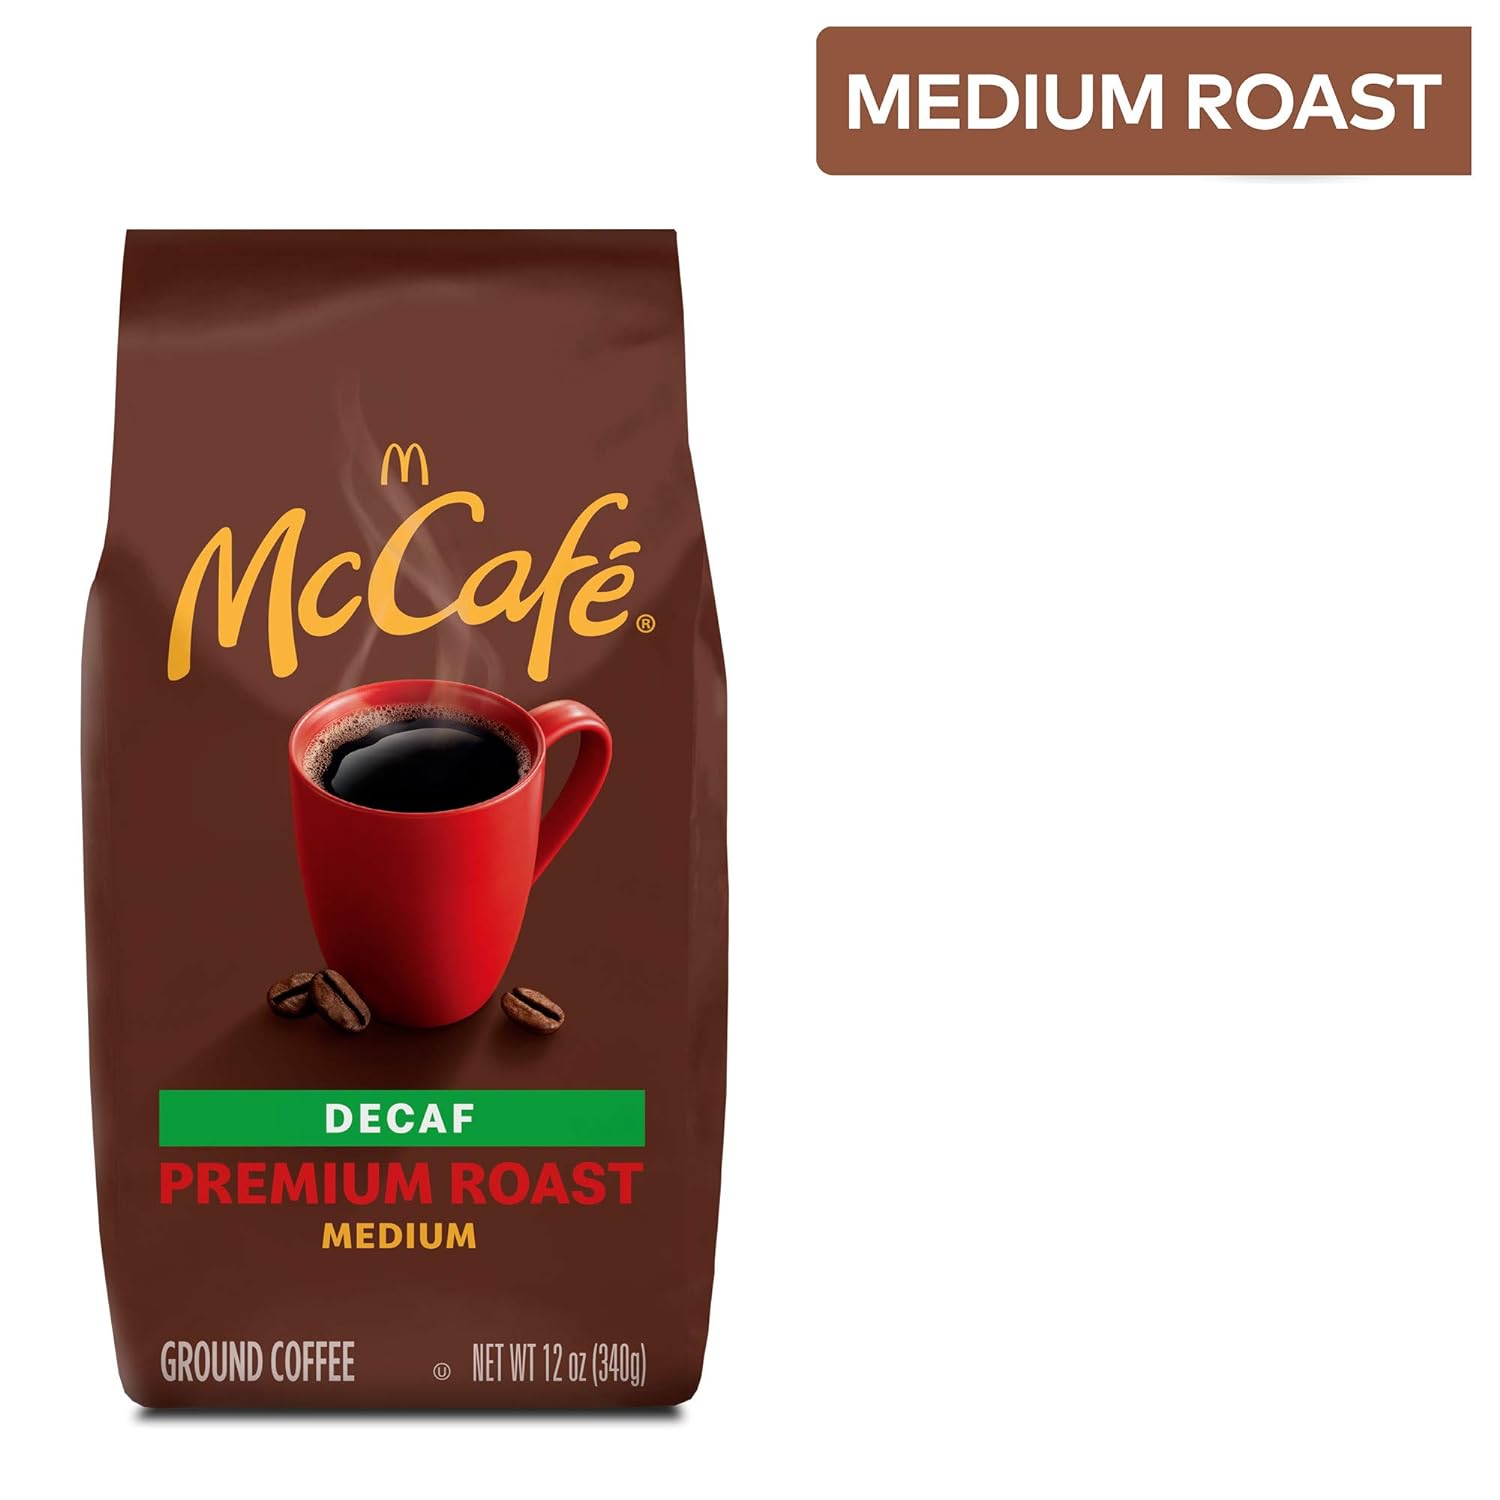 McCafe Medium Roast Ground Coffee, Premium Roast Decaf, 12 Oz : Everything Else